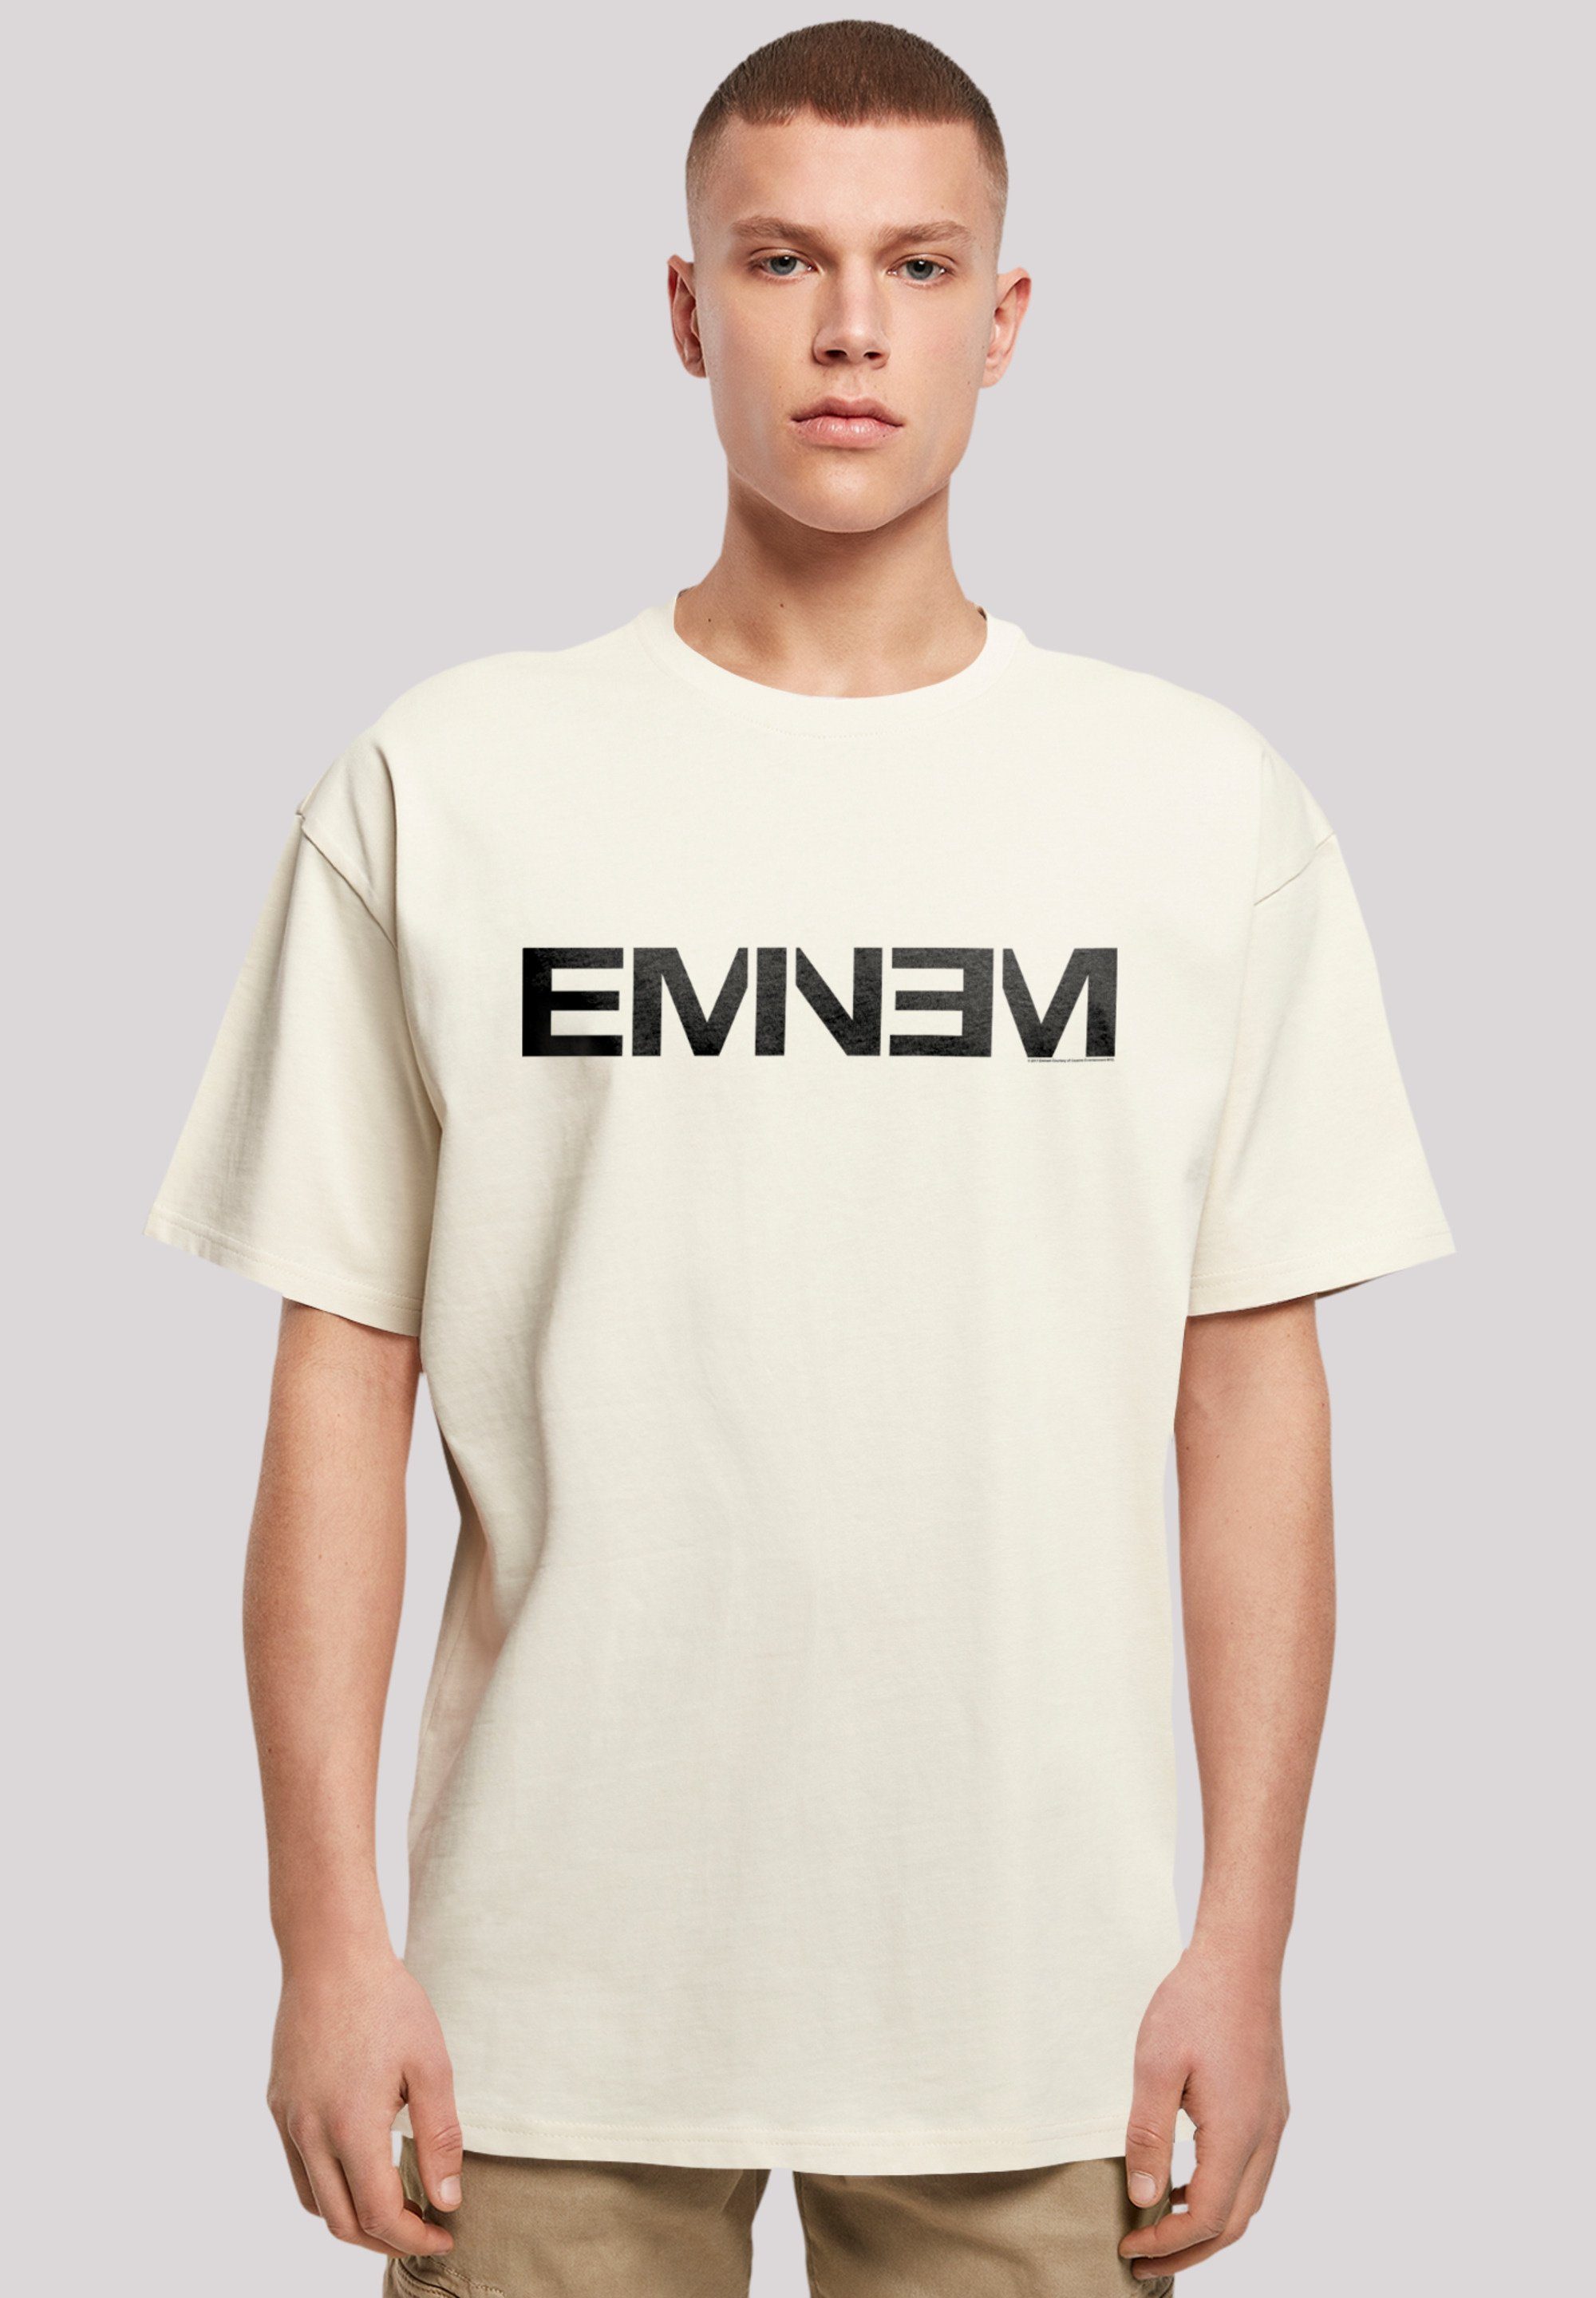 F4NT4STIC T-Shirt Eminem Hip Hop Rap Music Premium Qualität, Musik sand